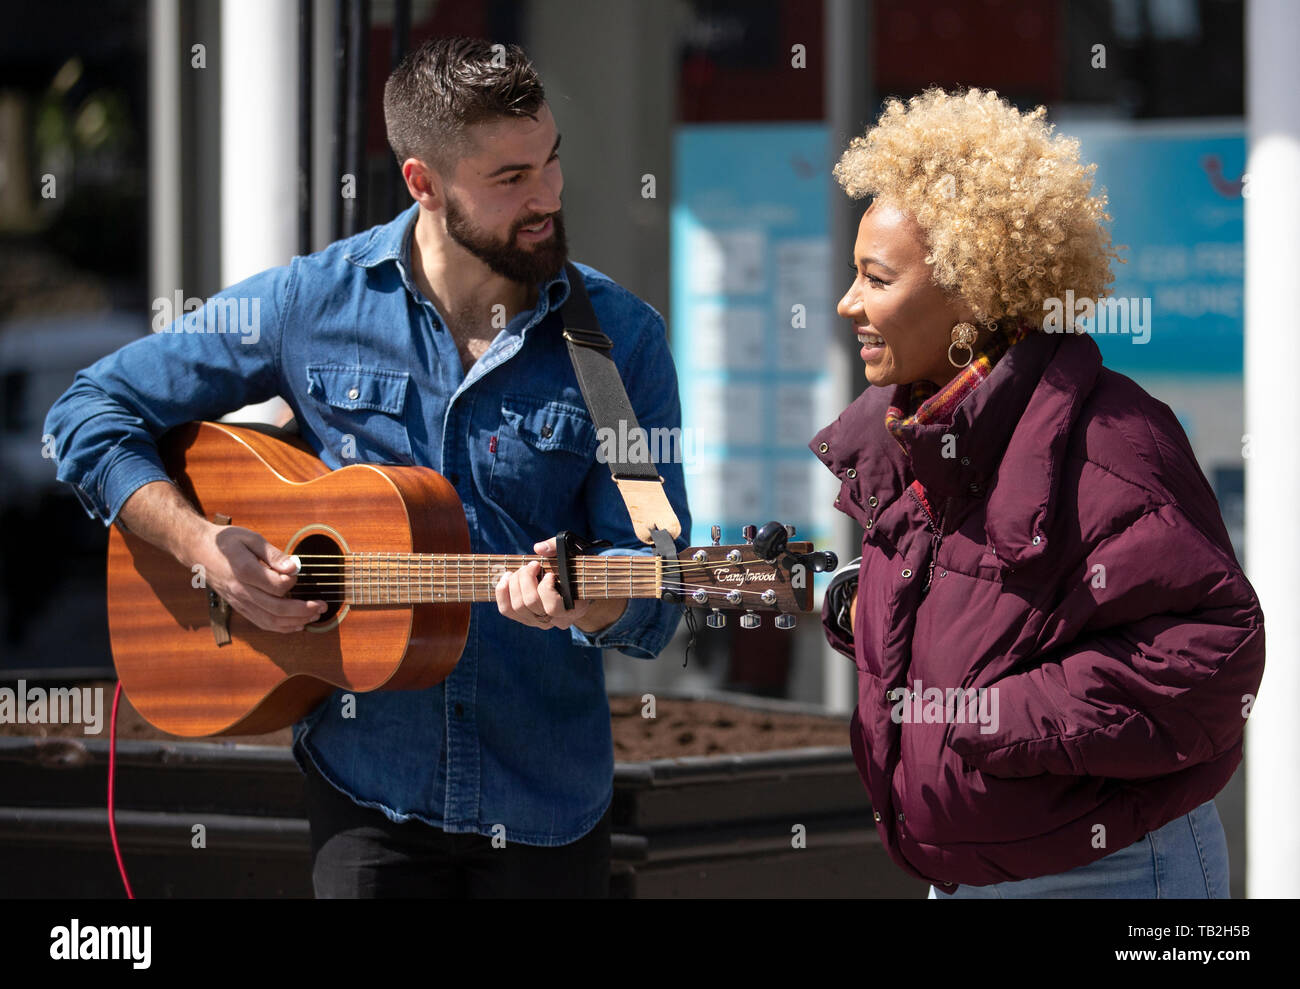 Singer-songwriter Emeli Sande with busking musician Finn Henderson Palmer during filming in her home city of Aberdeen for a new BBC Scotland series 'Emeli Sande's Street Symphony'. Stock Photo